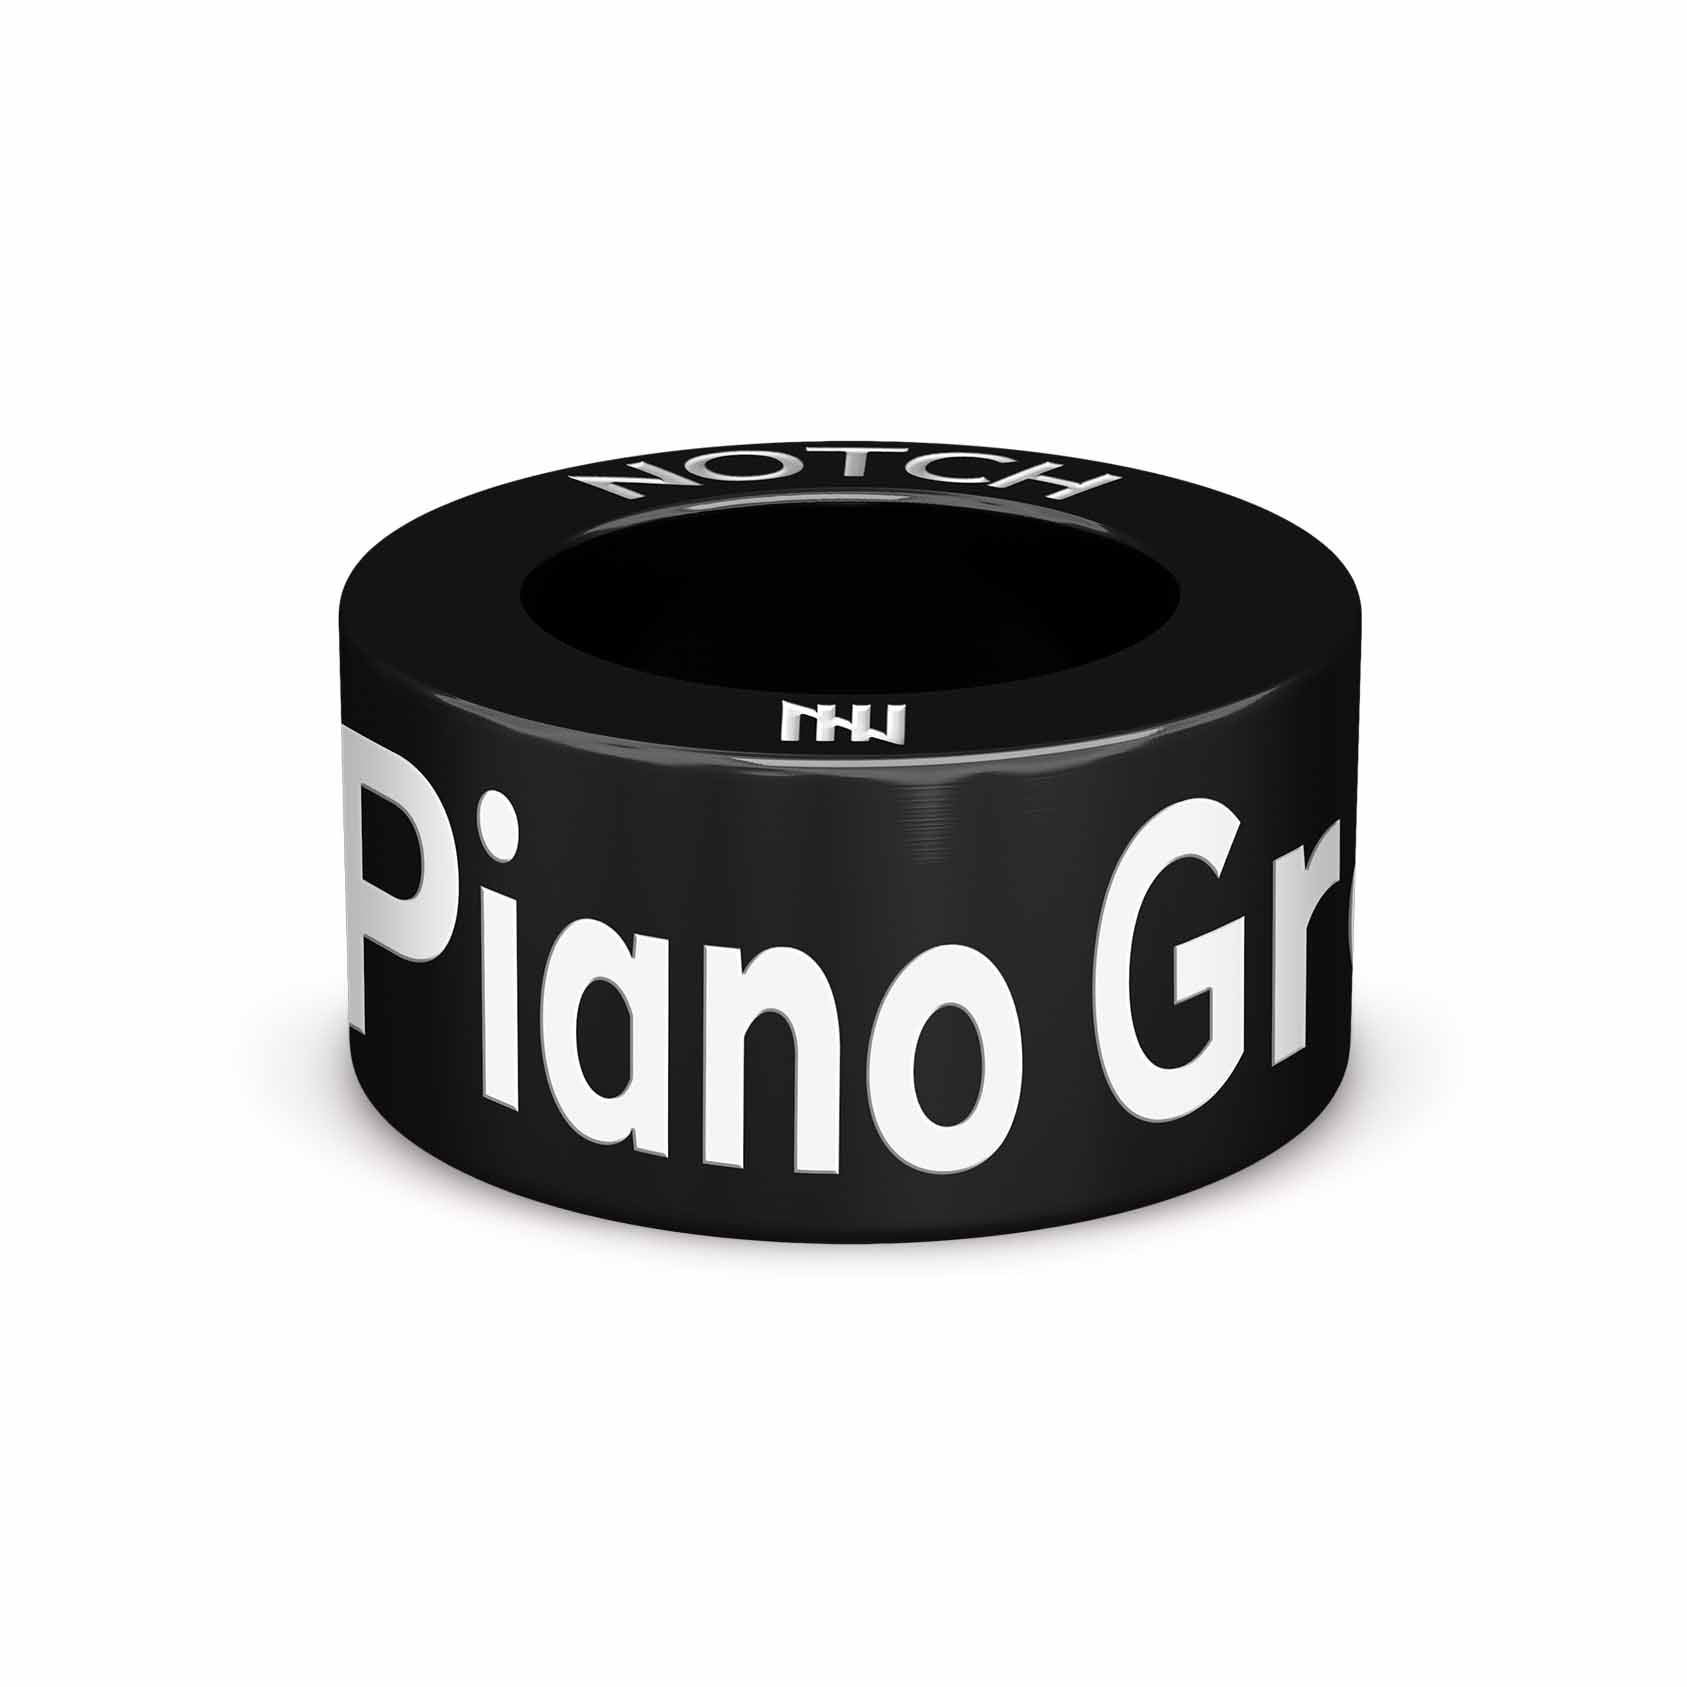 Piano Grades NOTCH Charm (Full List)